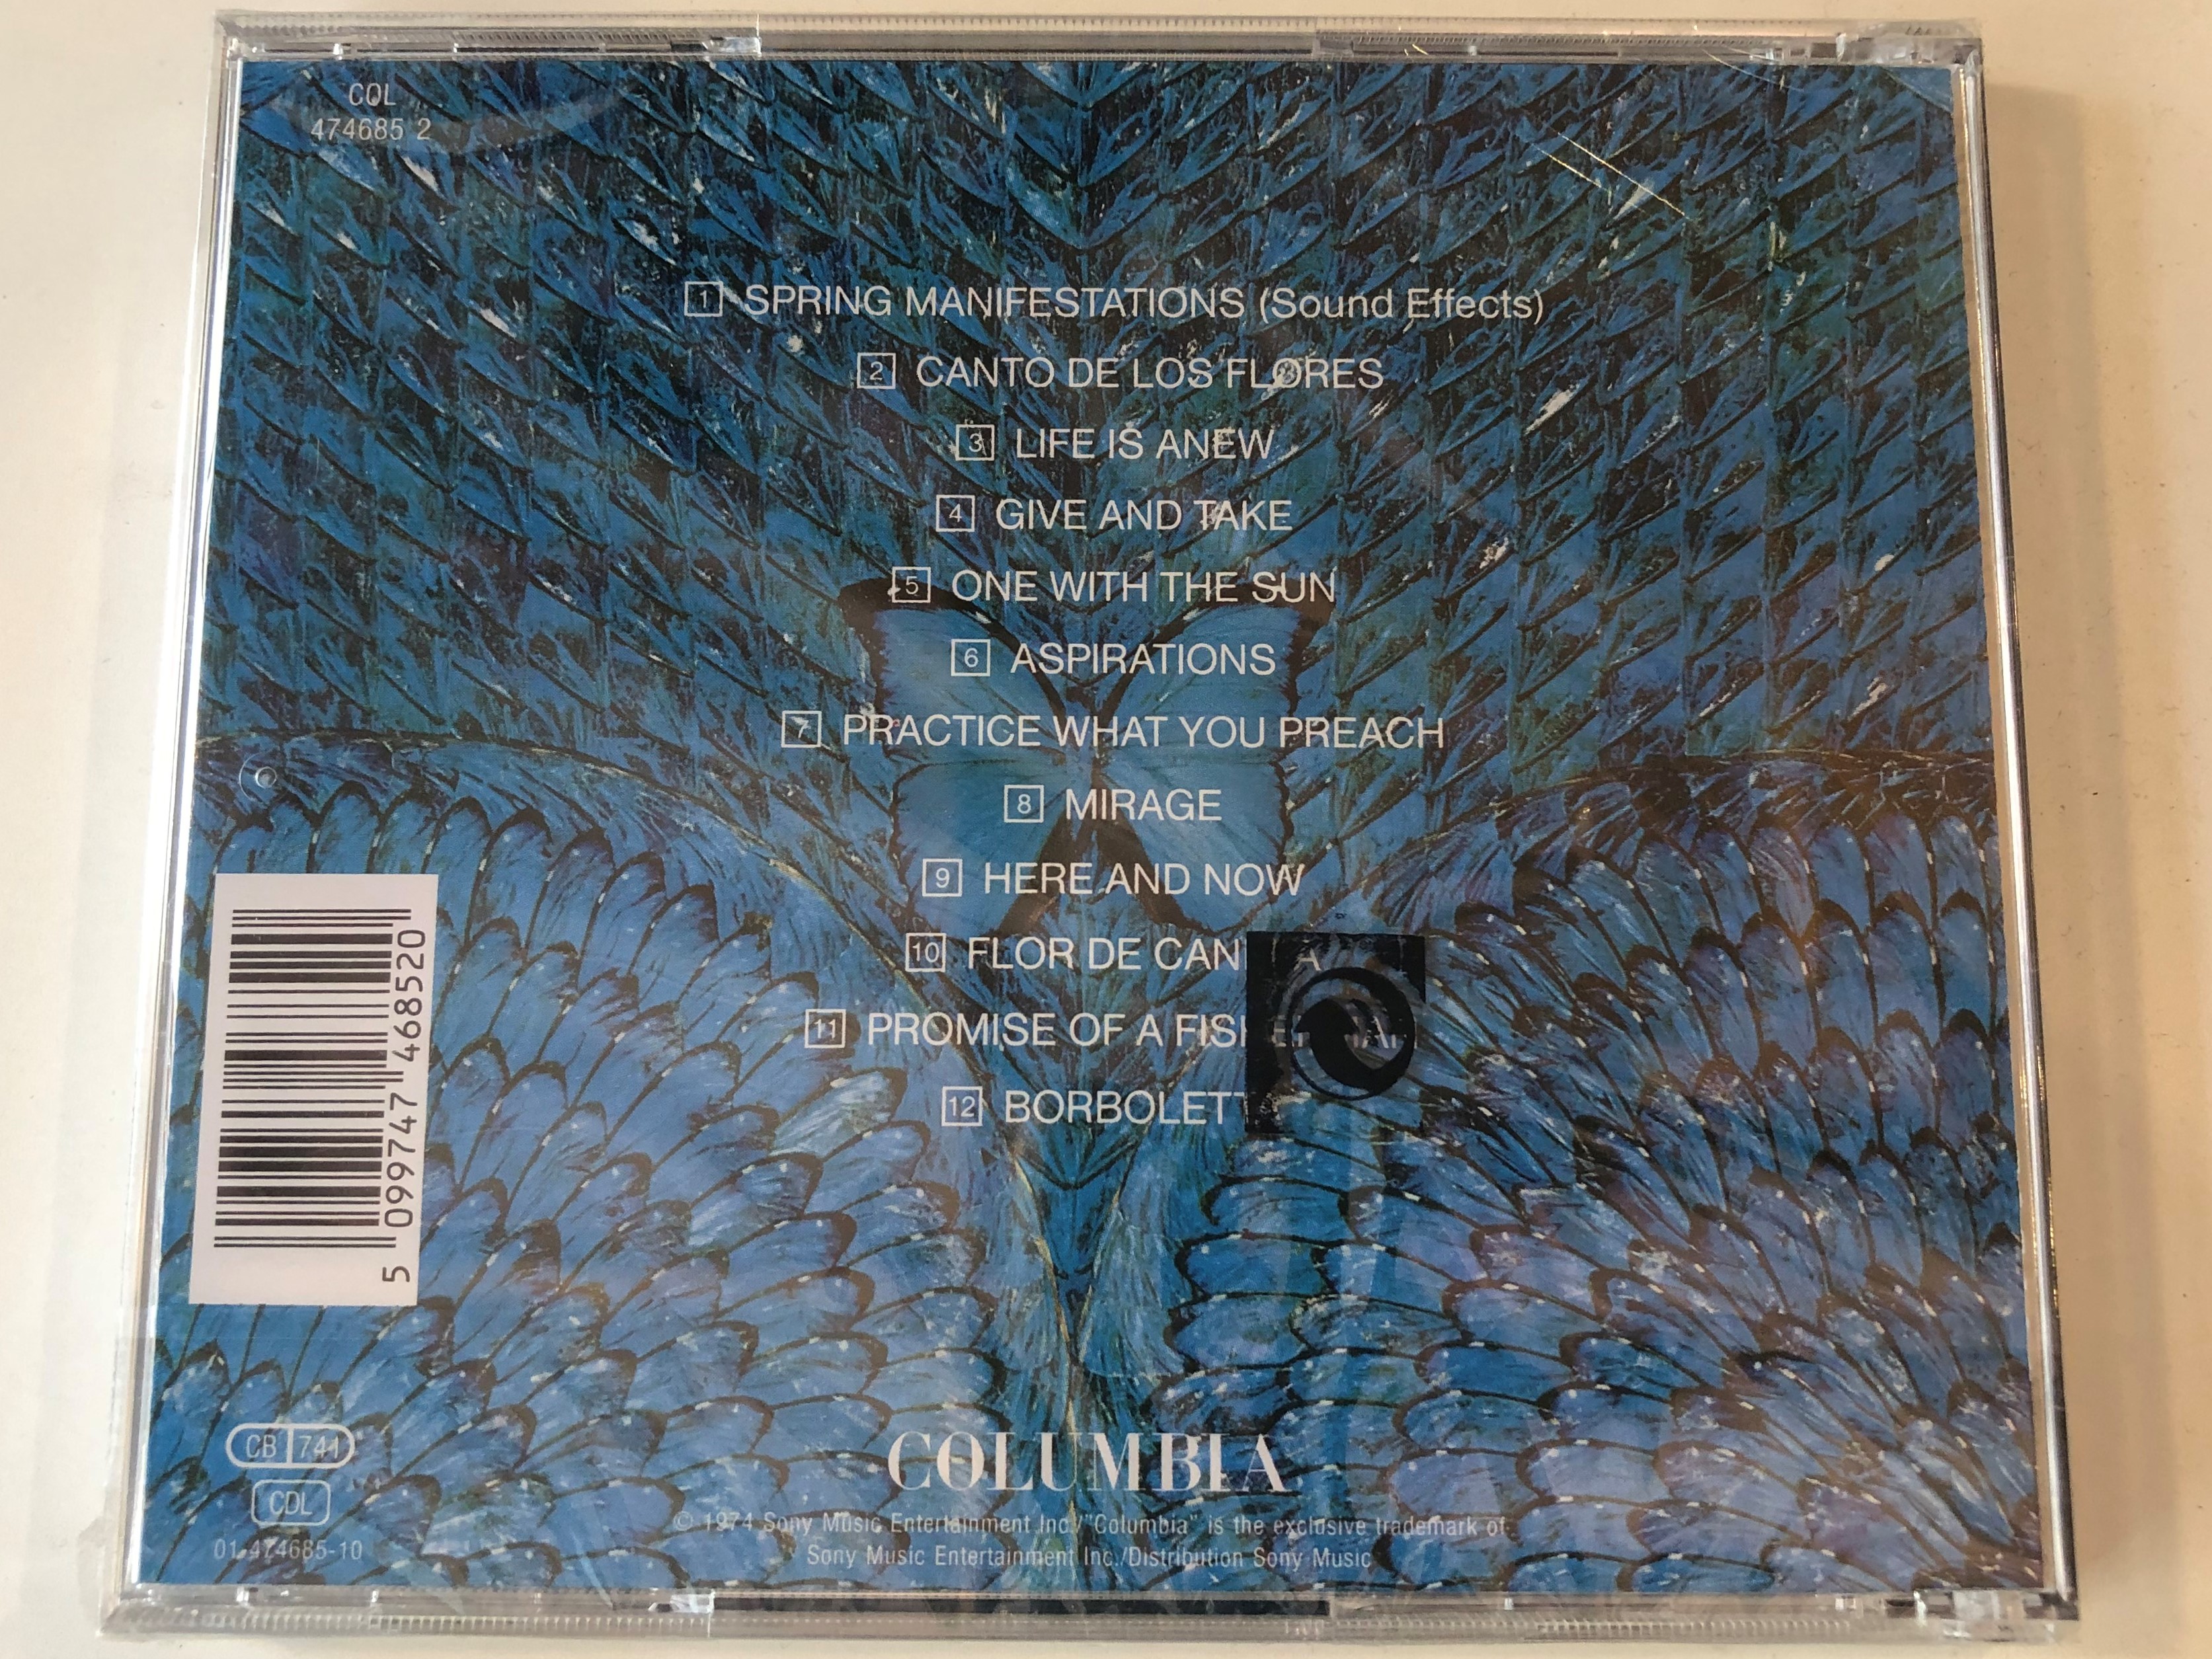 santana-borboletta-columbia-audio-cd-01-474685-10-2-.jpg